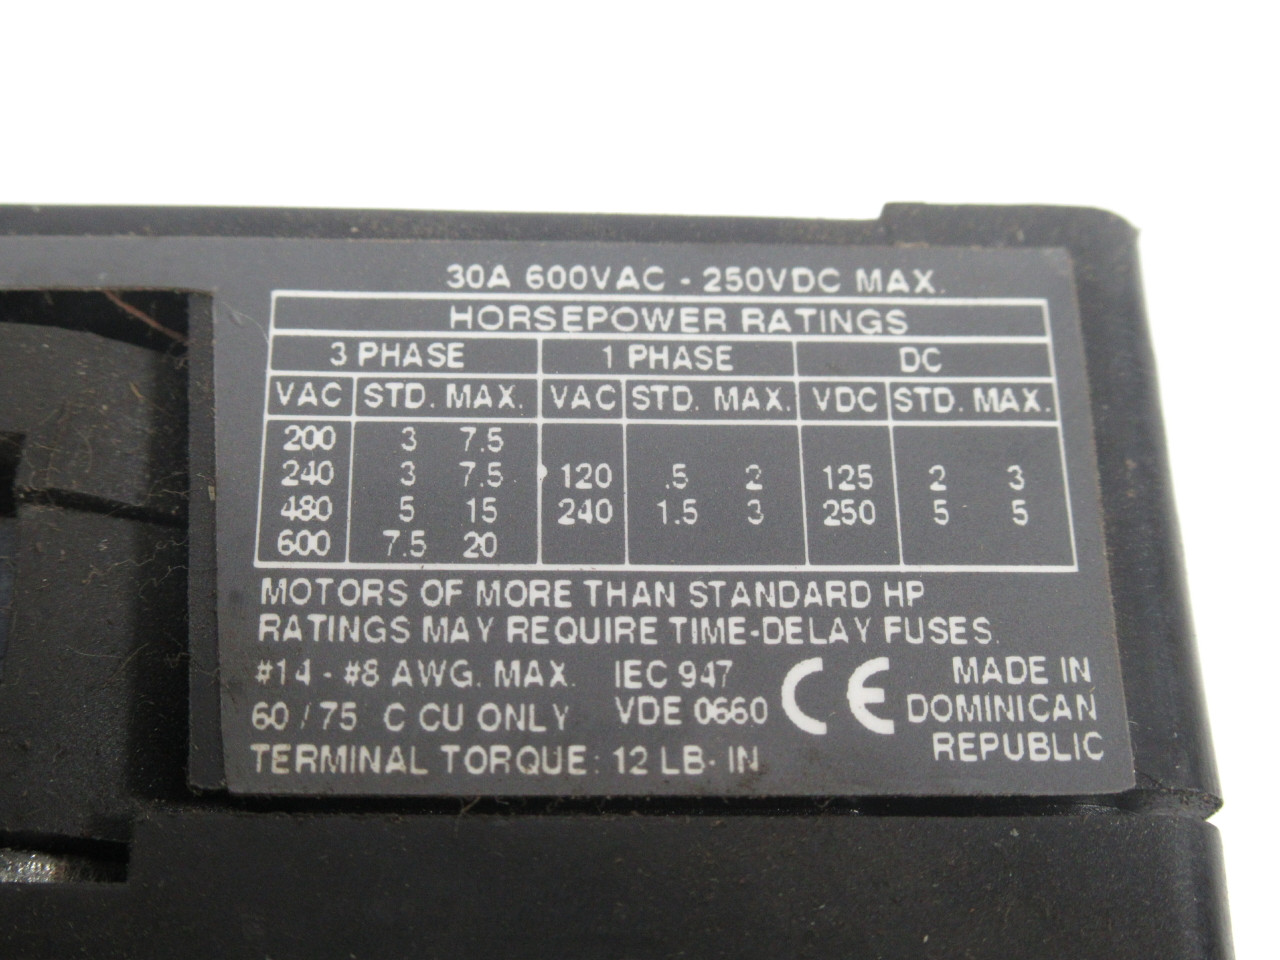 Allen-Bradley 194R-NJ030P3 Disconnect Switch Series B 30A 11-1/4" Shaft USED